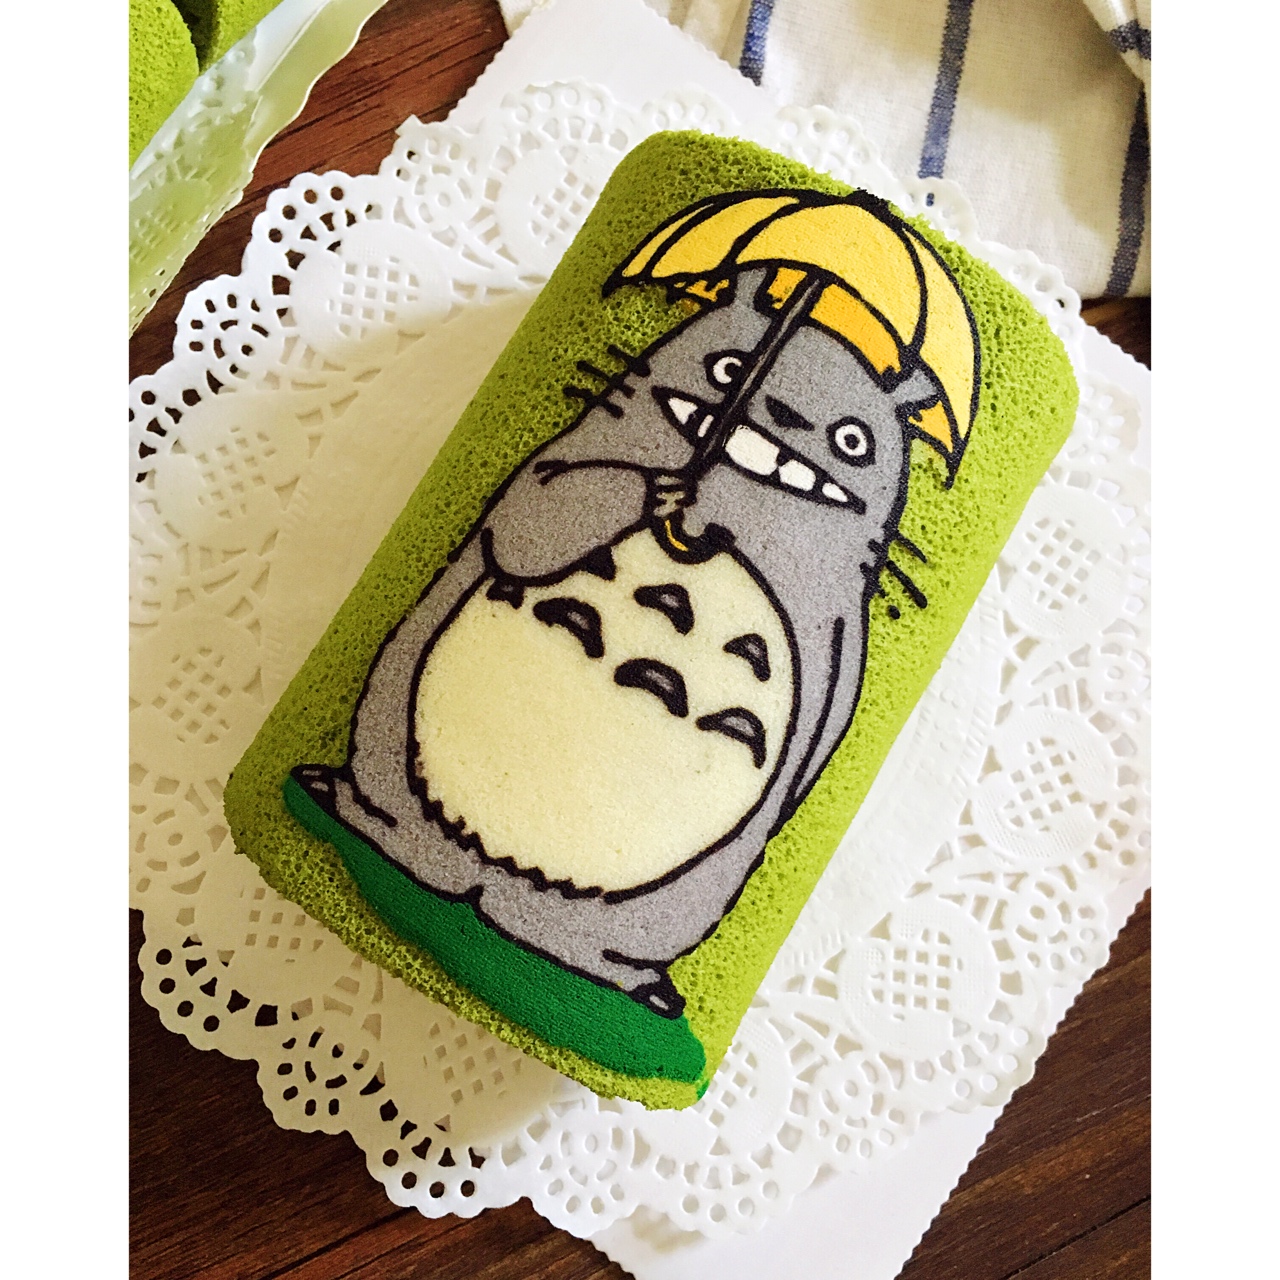 超级罗嗦ゆ彩绘蛋糕卷